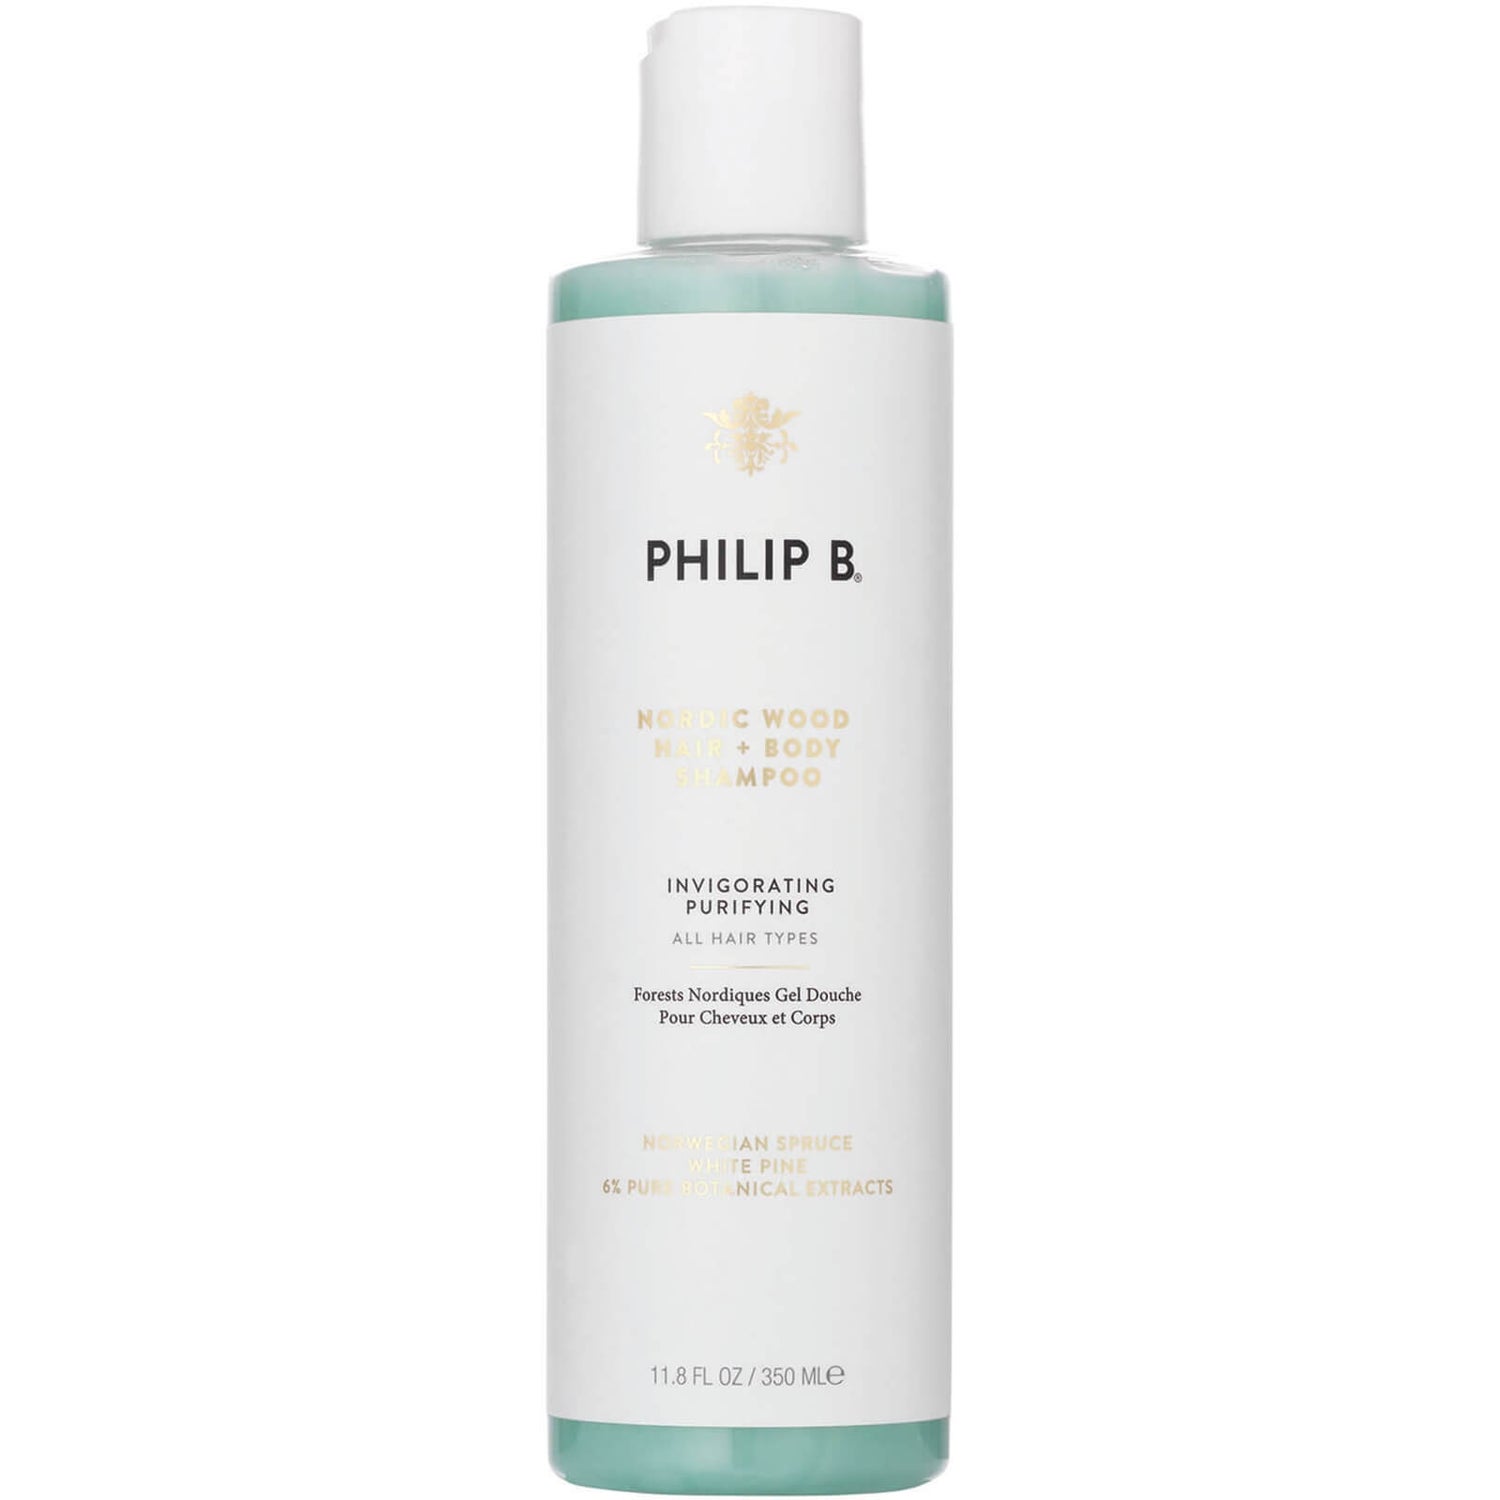 Philip B Nordic Wood Hair and Body Shampoo 11.8 fl. oz